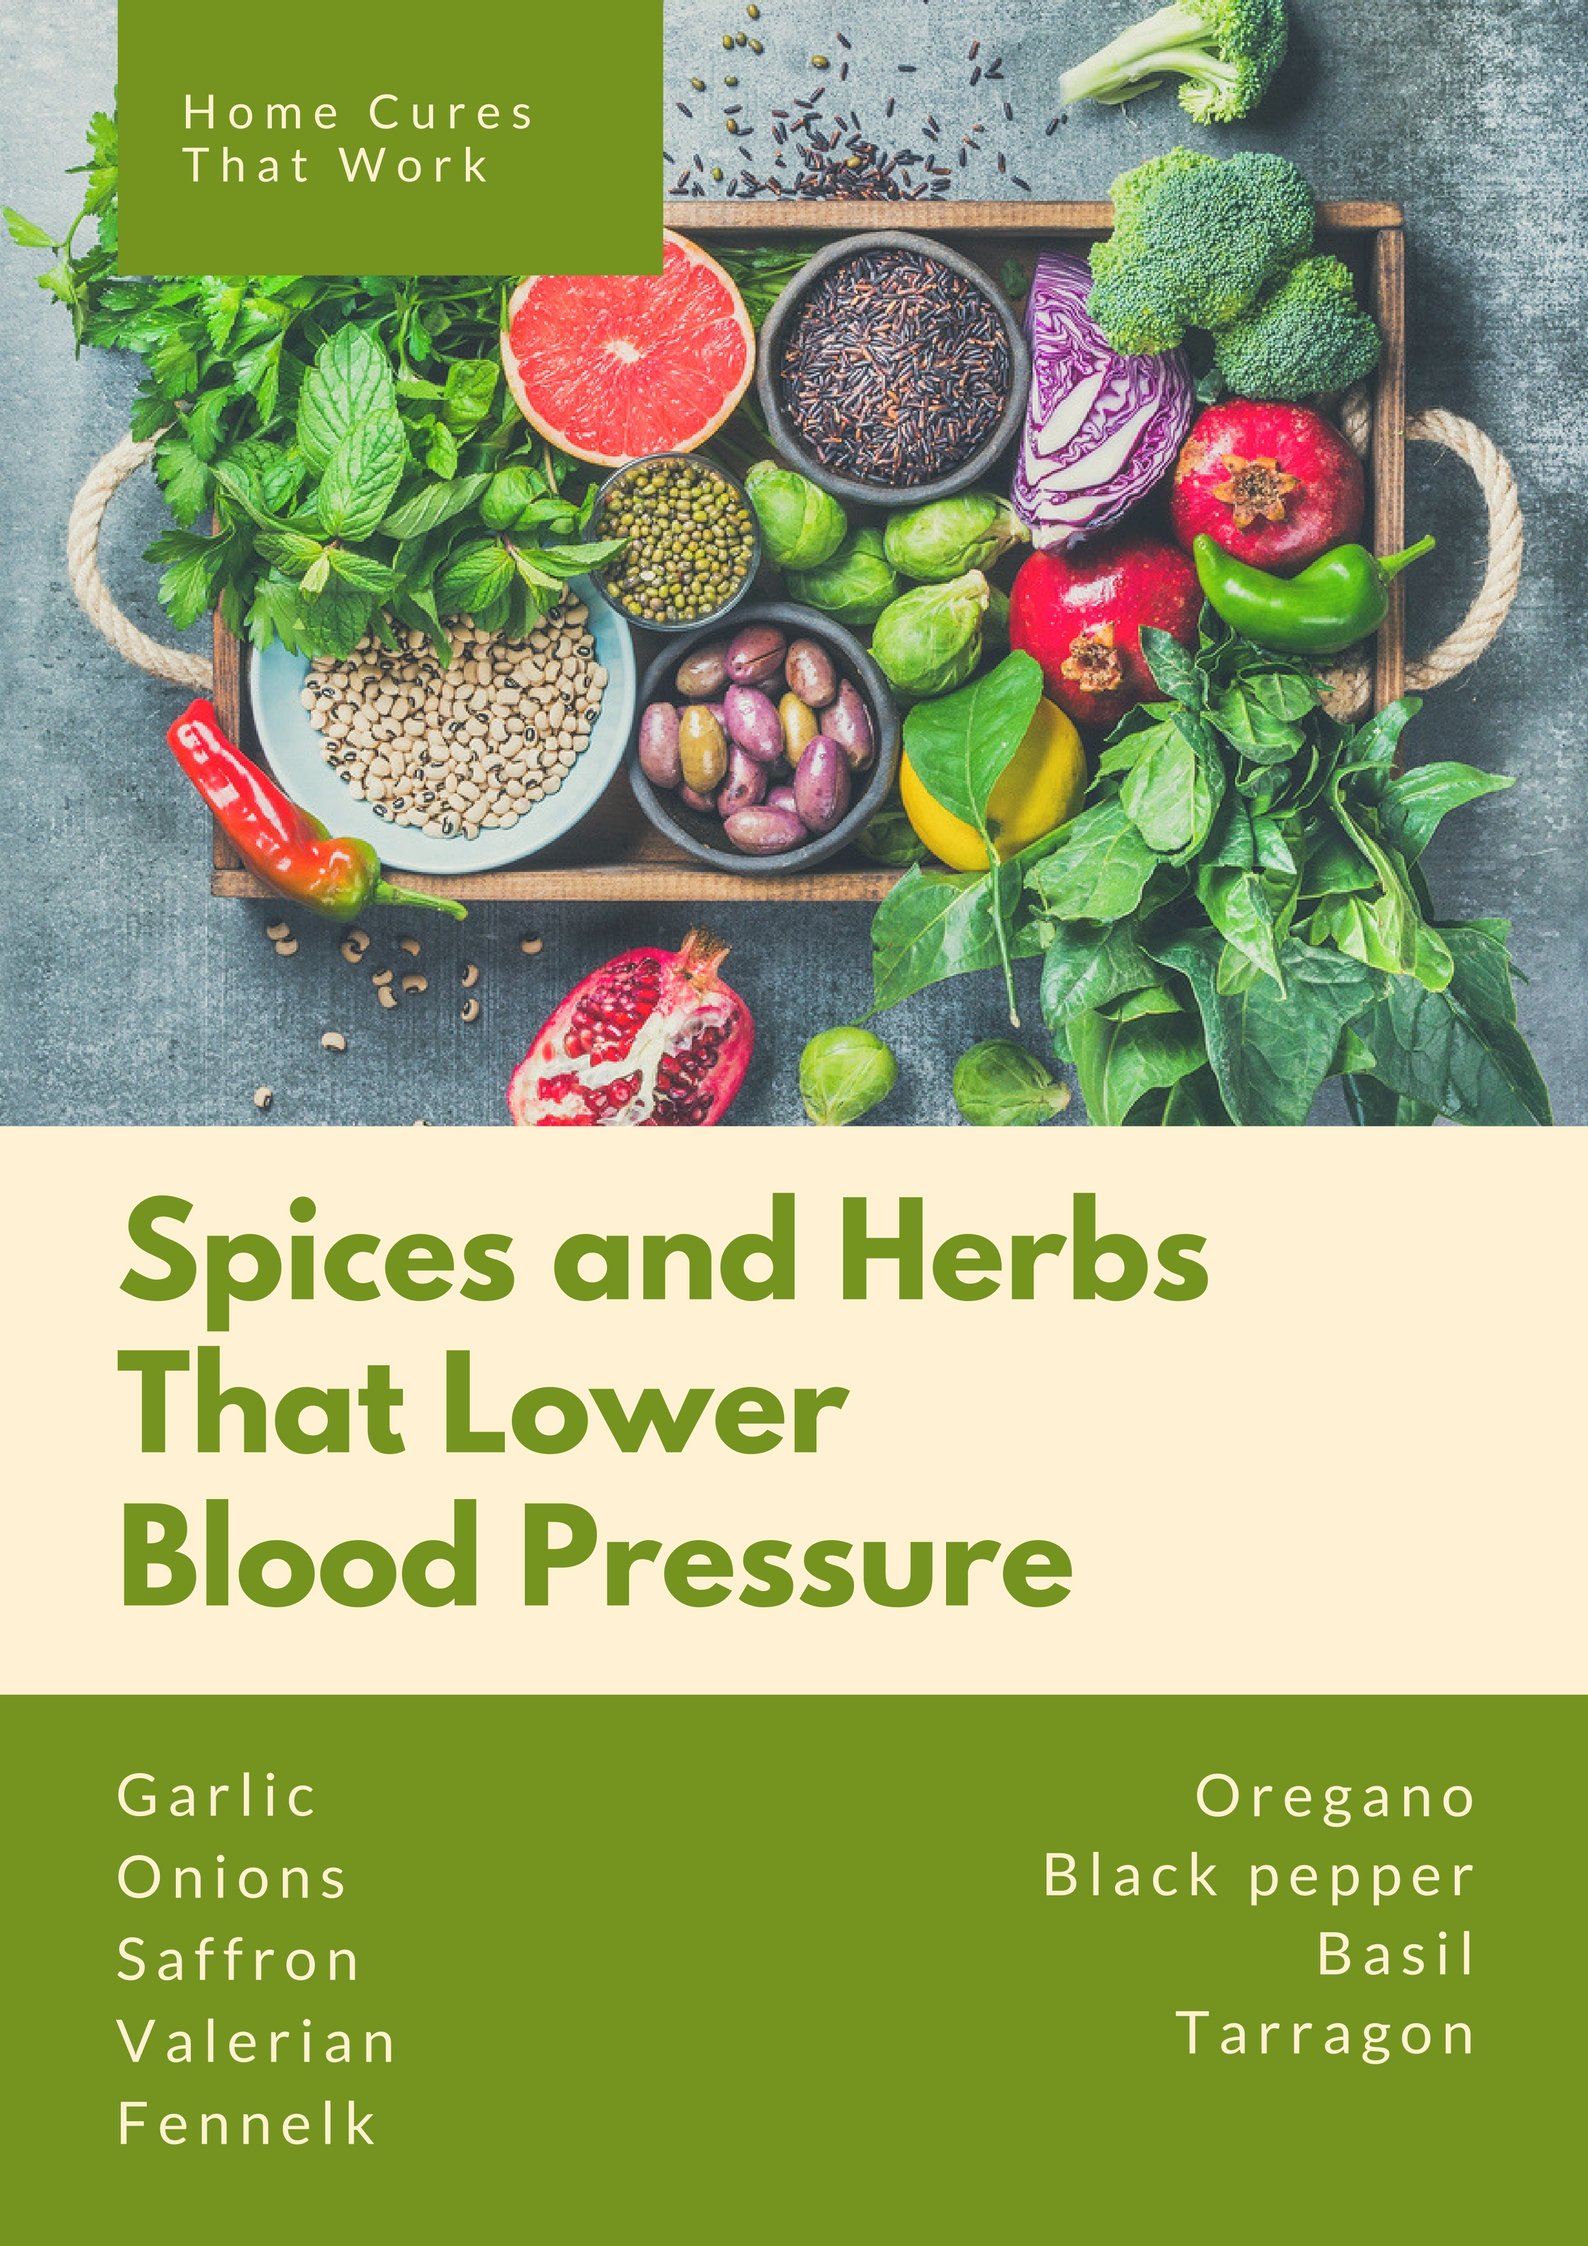 7 Herbs that Lower High Blood Pressure